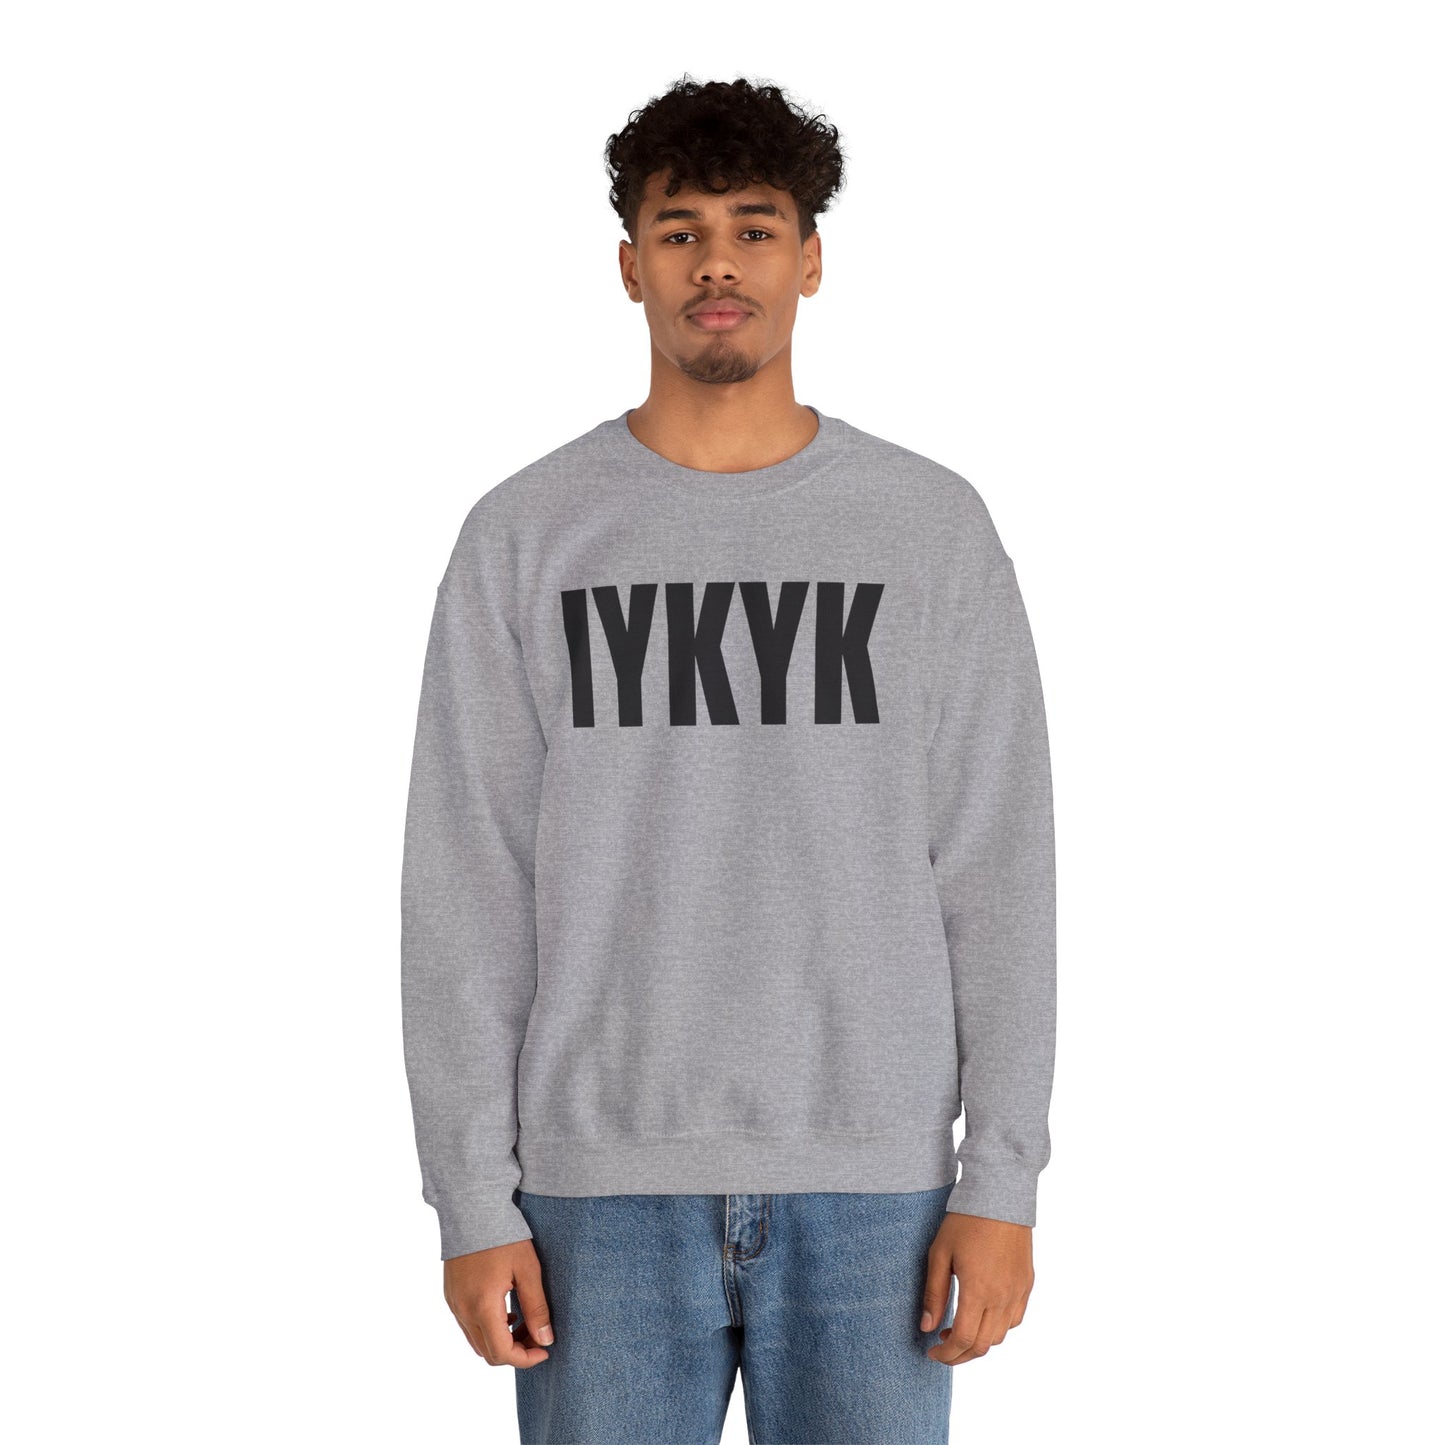 IYKYK Unisex Heavy Blend Crewneck Sweatshirt: Comfort, Style, and Ethical Craftsmanship